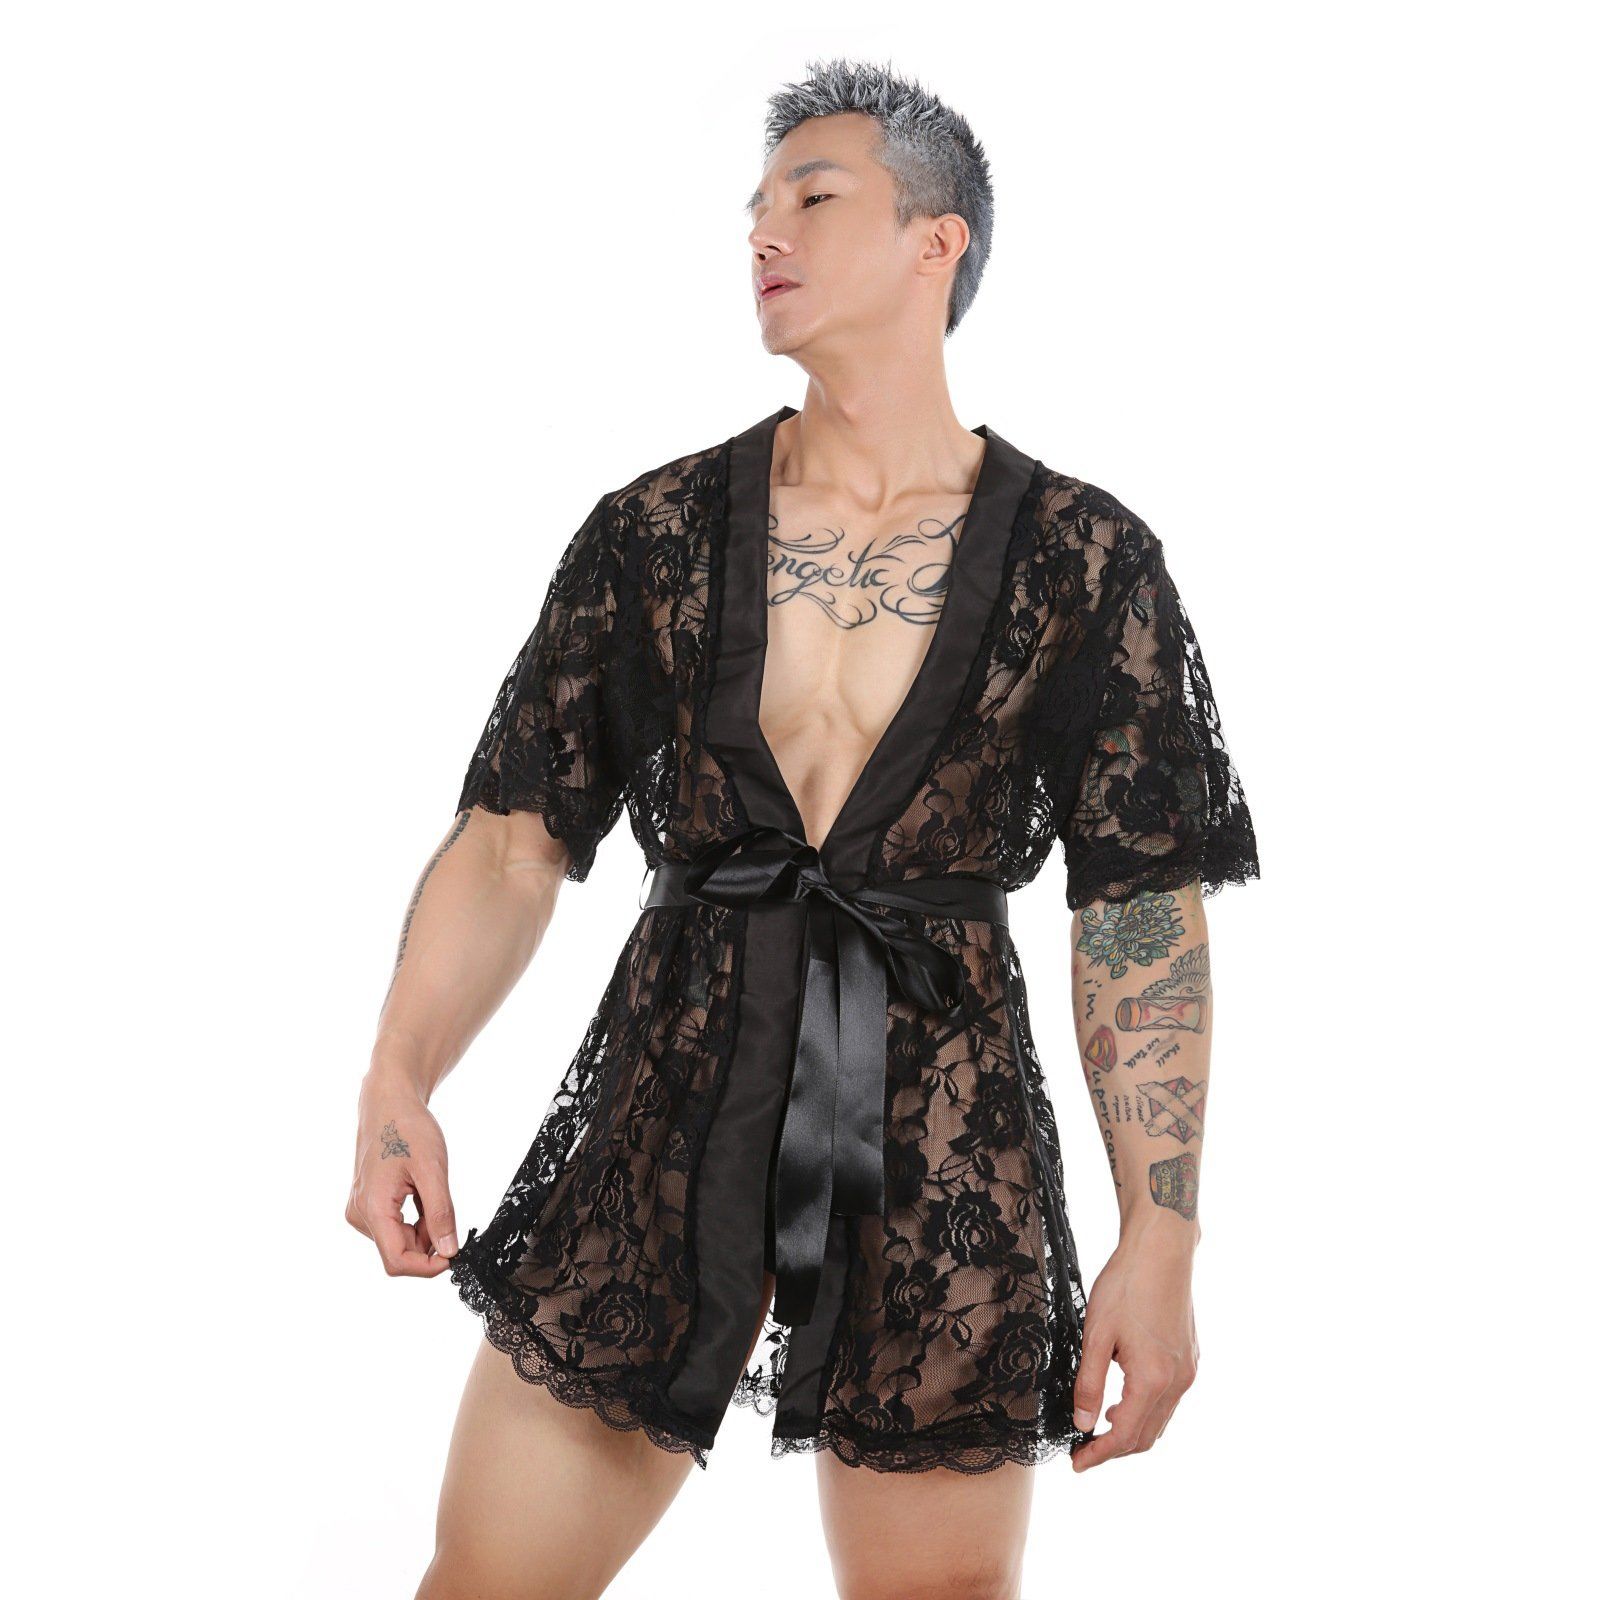 Men's super sexy perspective seductive interest Nightgown lace transparent thong bathrobe home suit